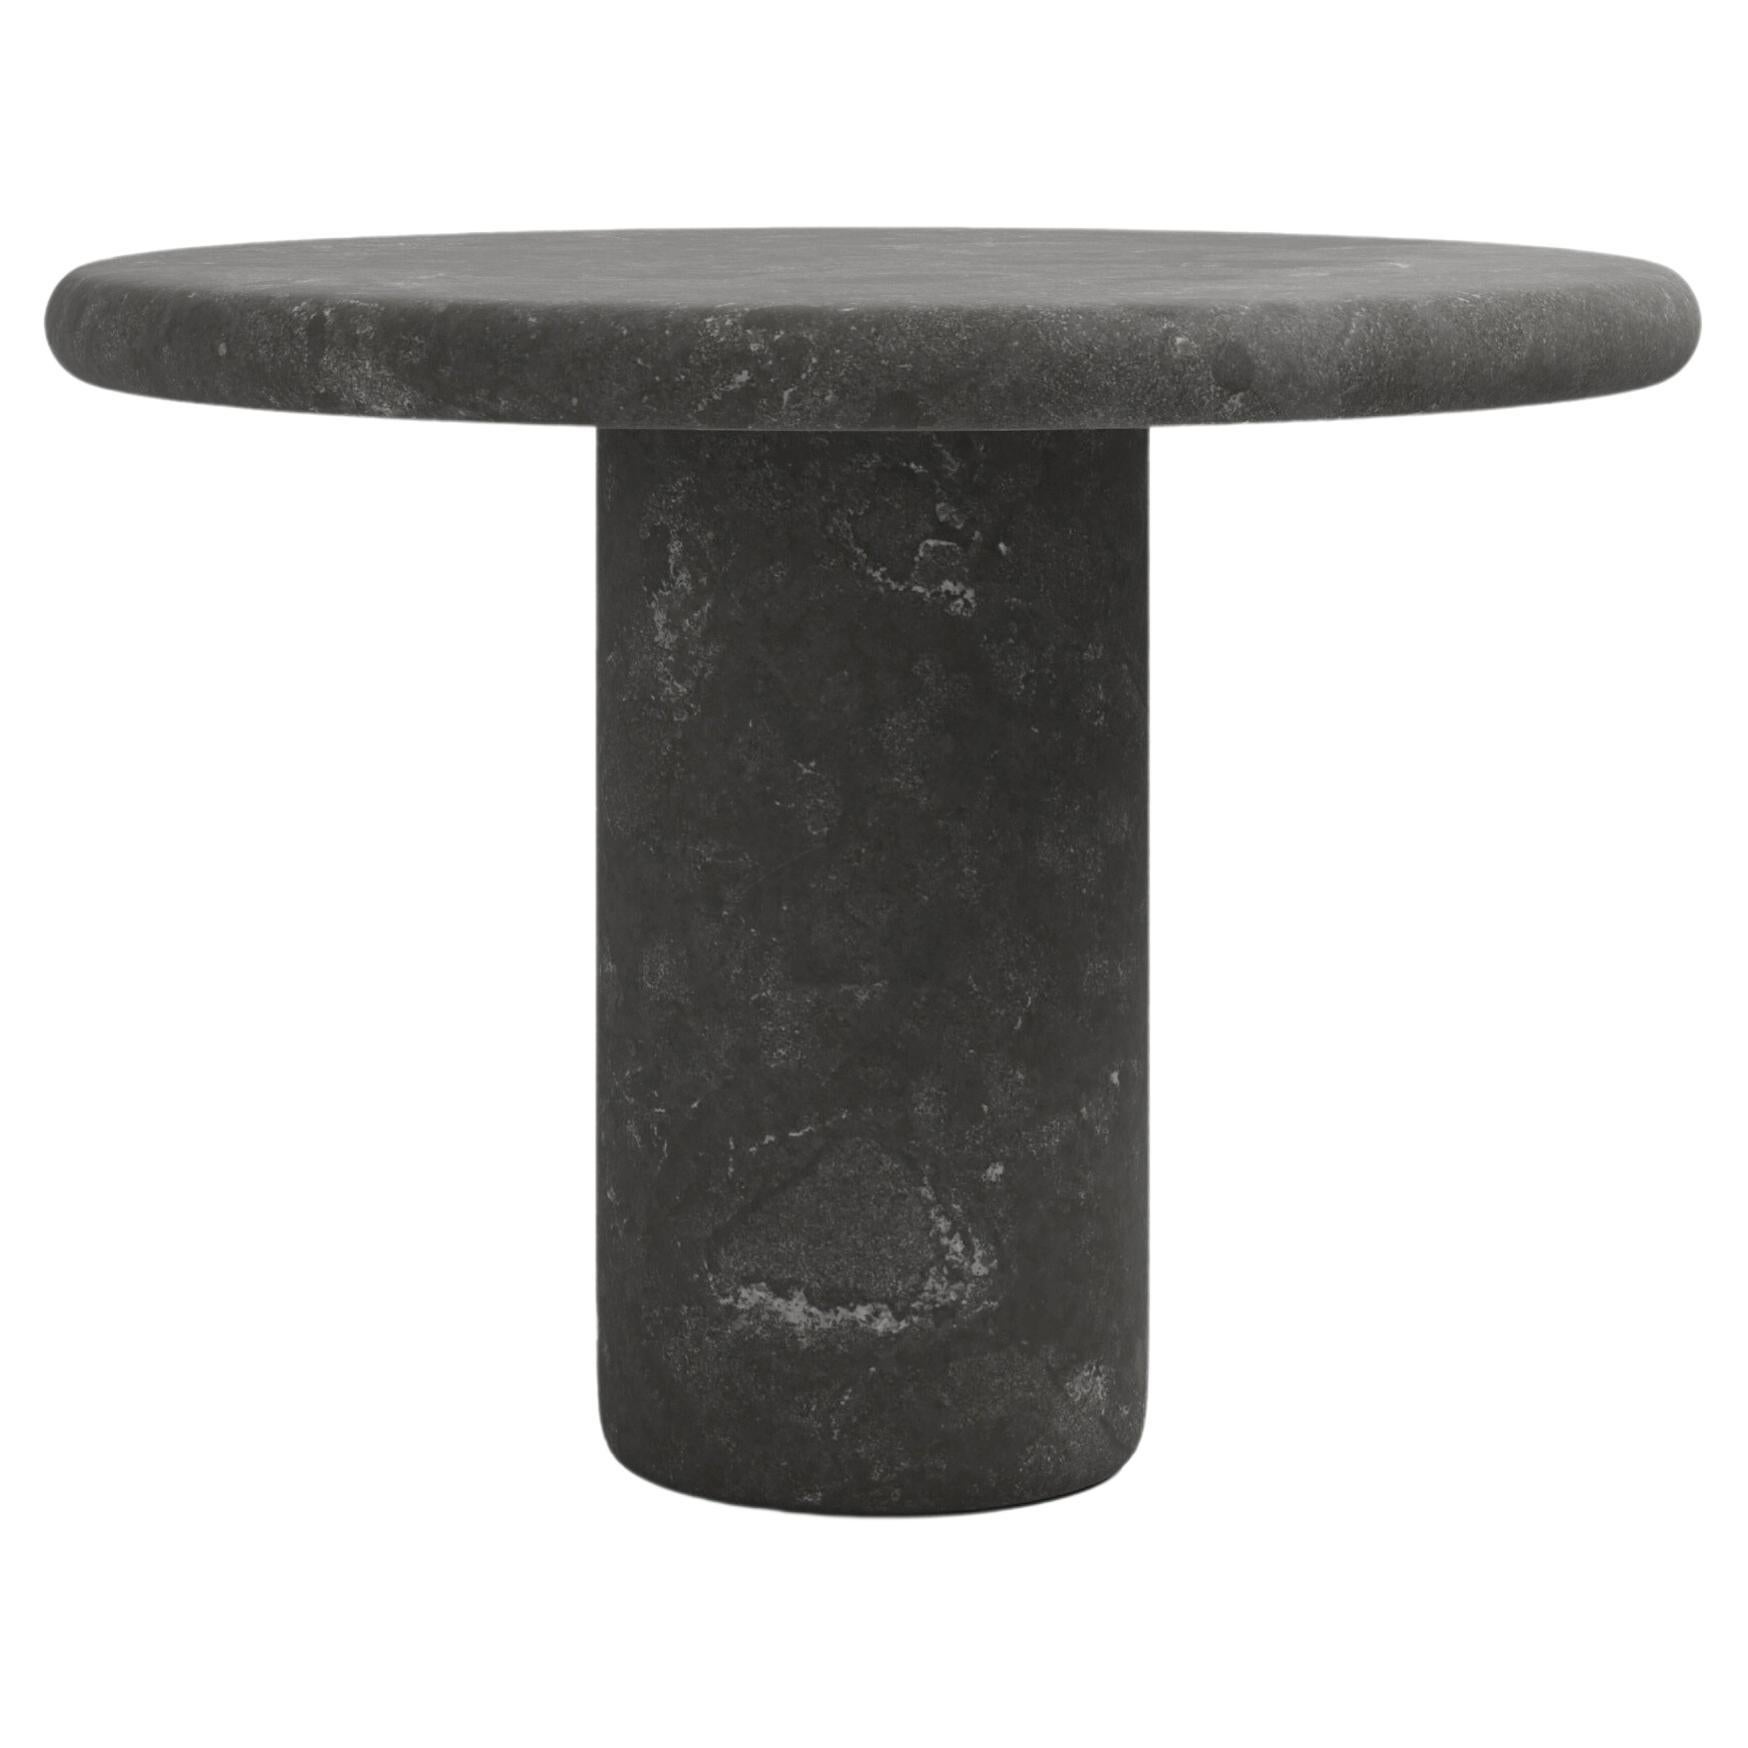 FORM(LA) Luna Round Dining Table 36”L x 36”W x 30”H Nero Petite Granite